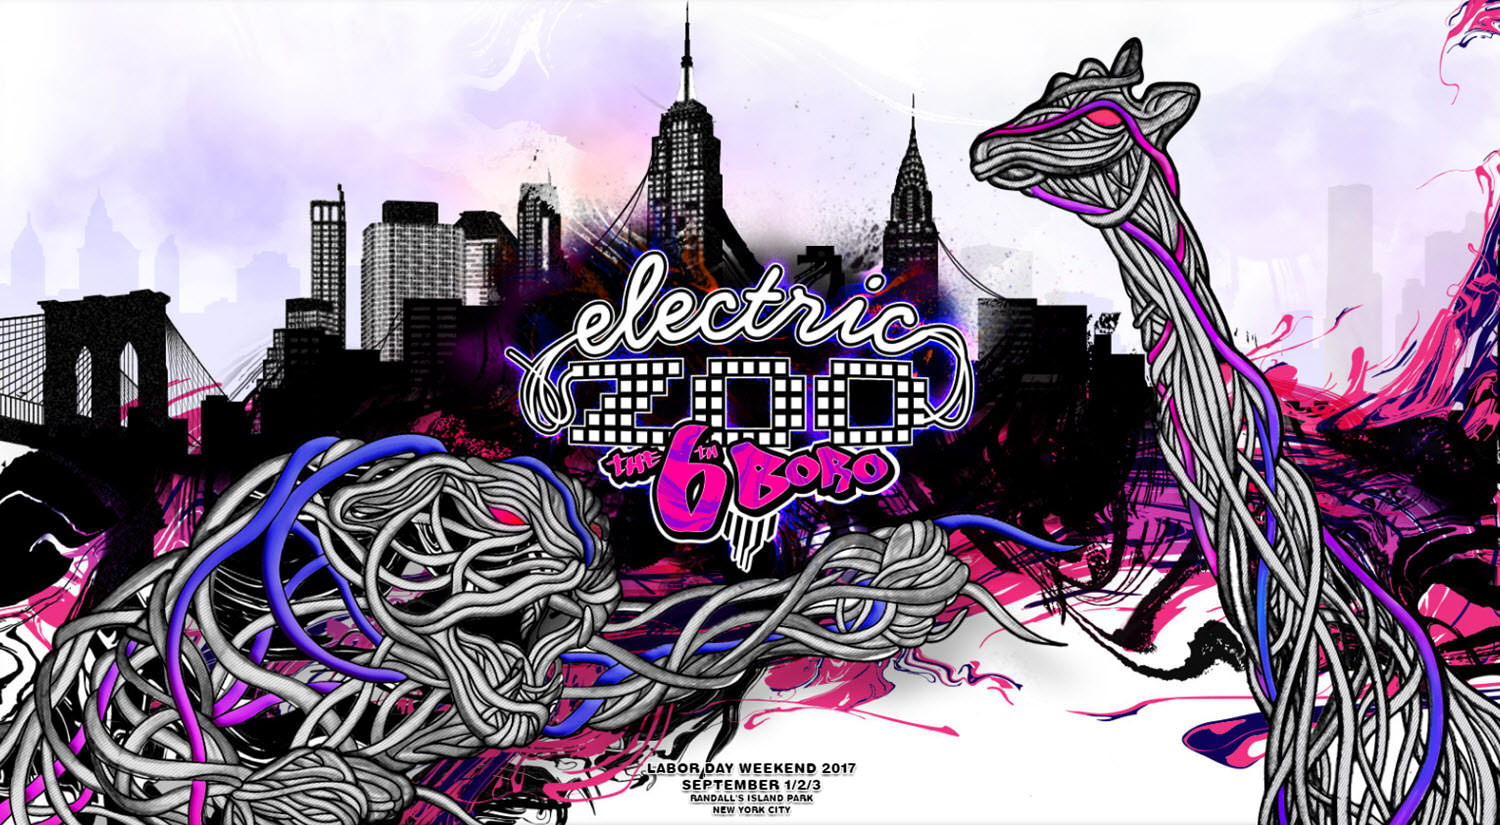 mejores eventos festivales musica electronica mundo primavera verano cartel electric zoo festival 2017